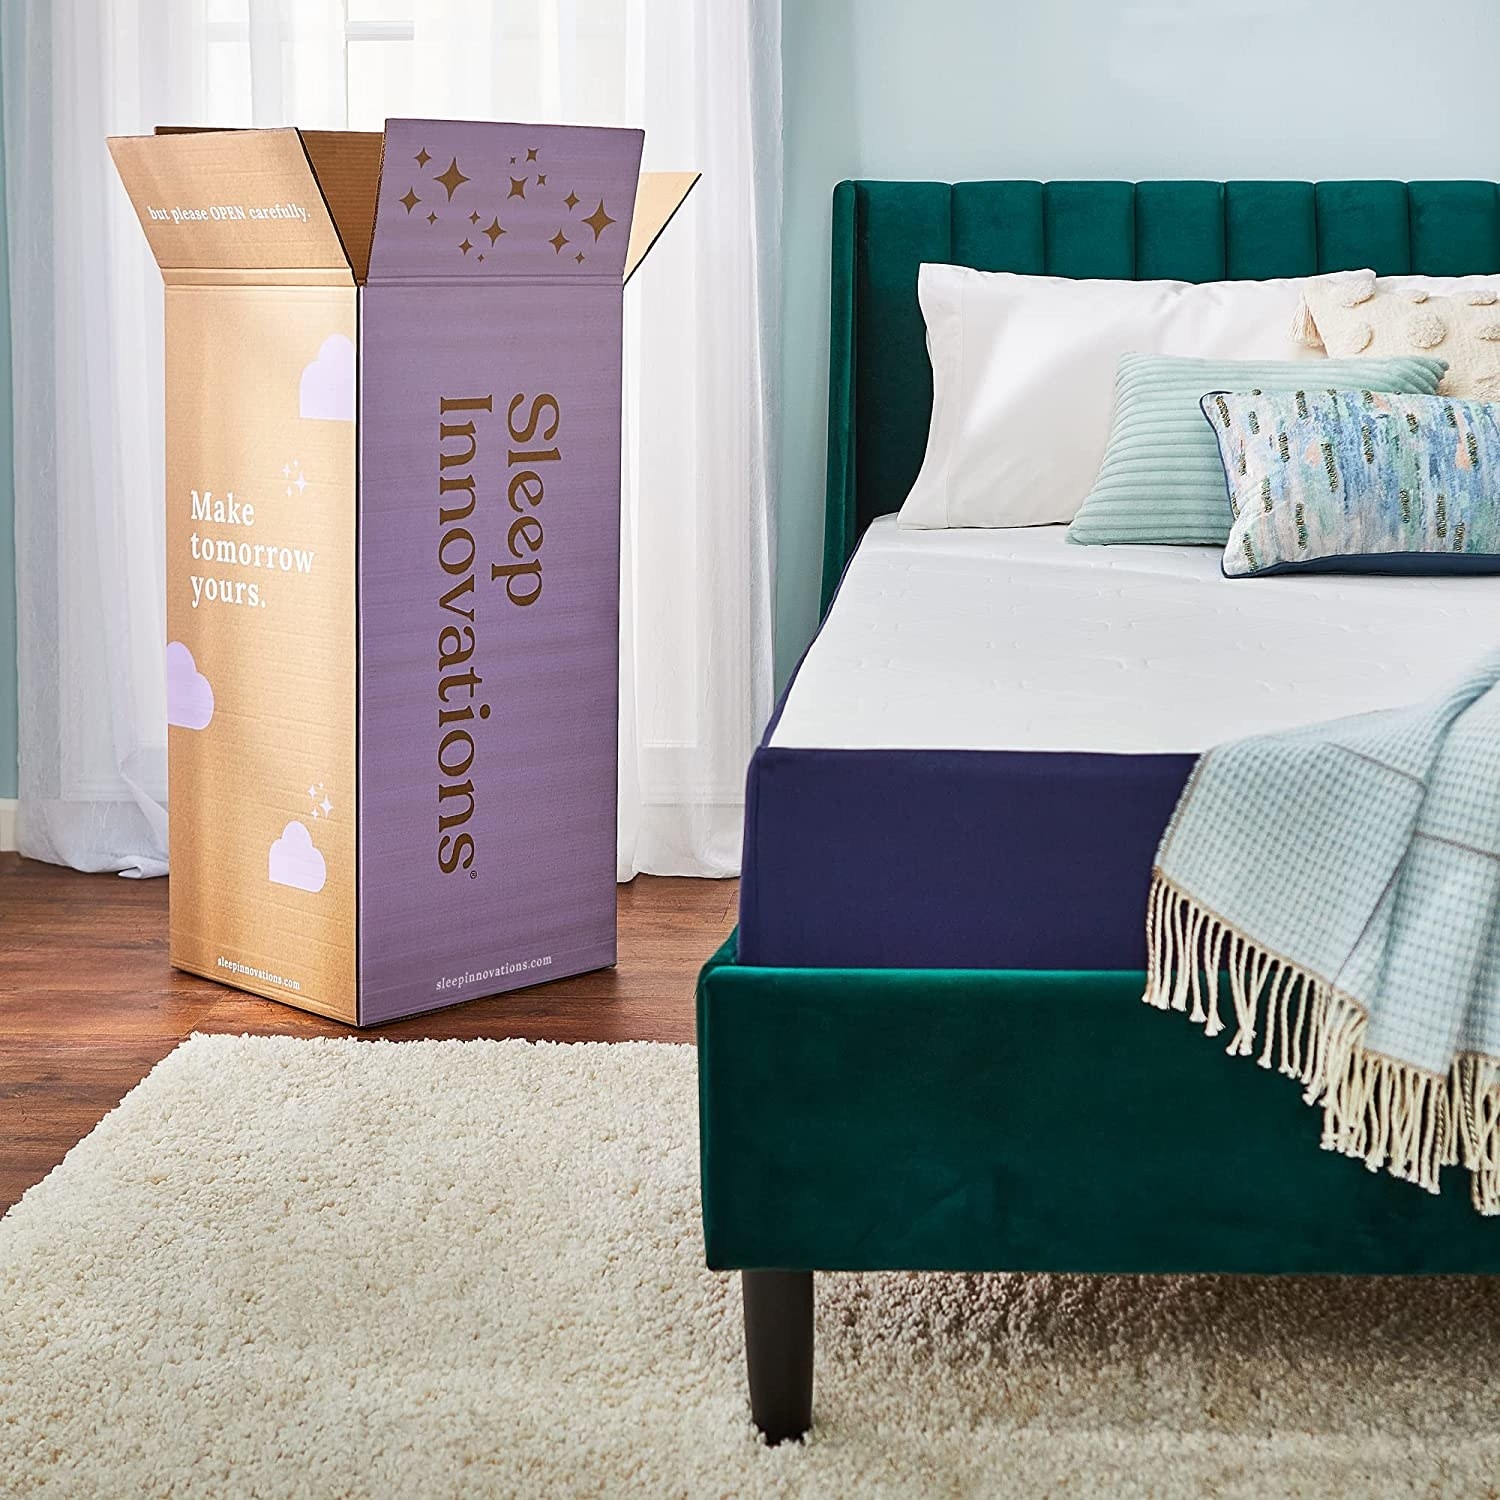 sleep innovations box next to mattress on green bed frame